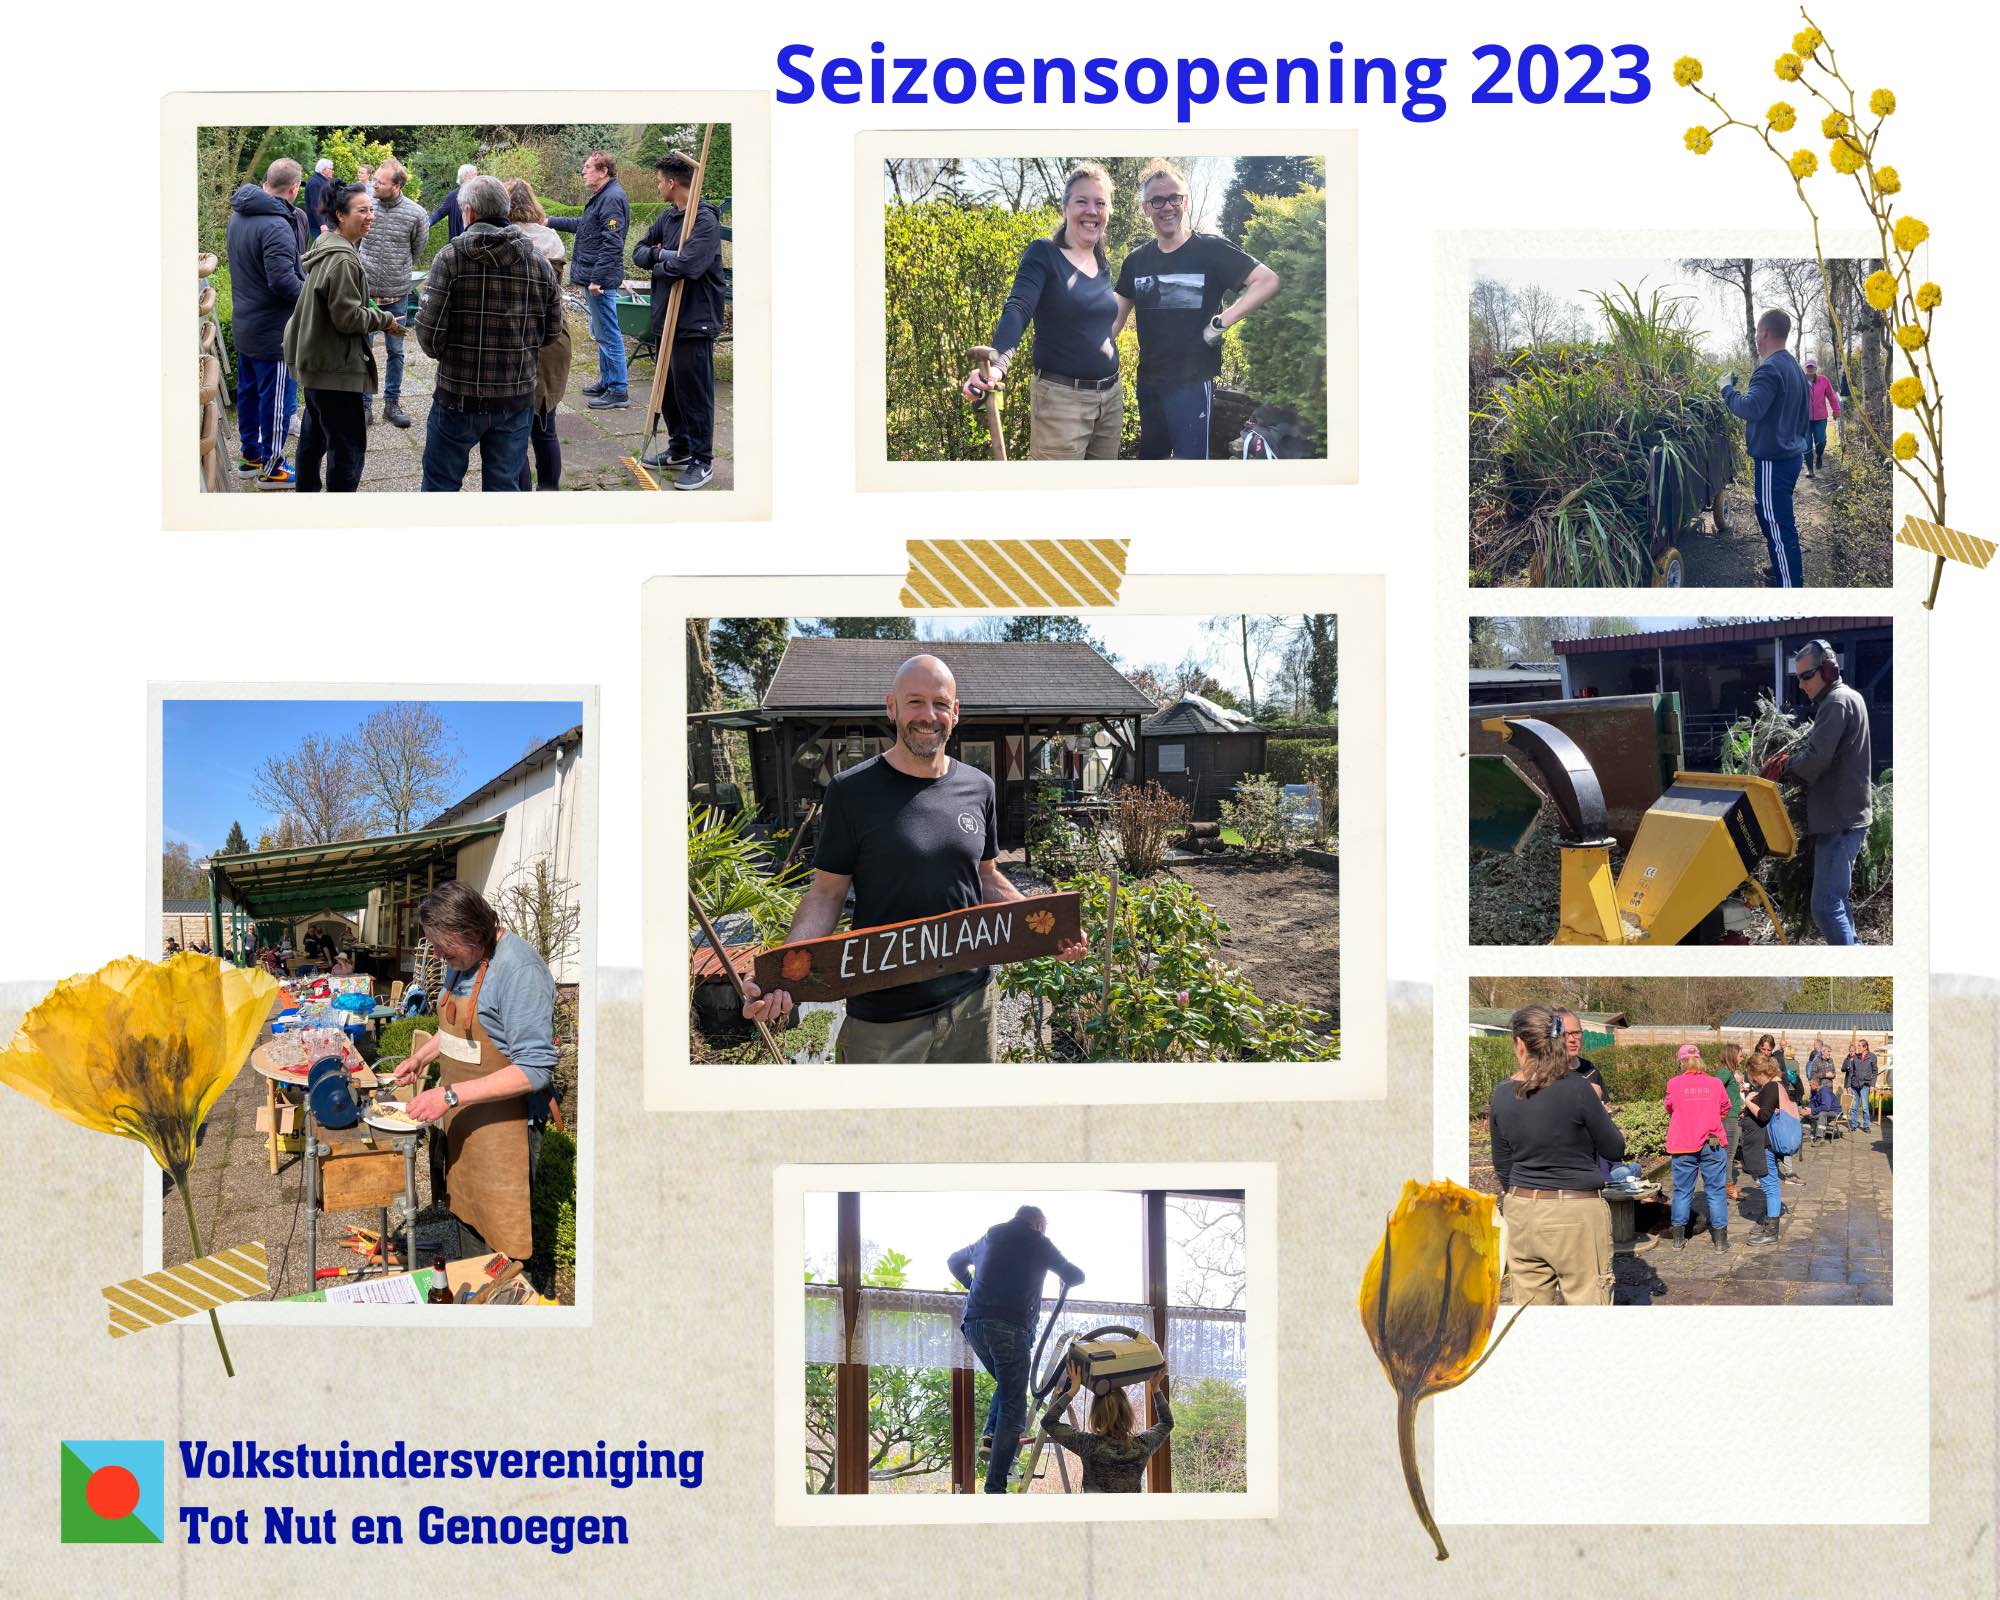 Seizoensopenining 2023 2